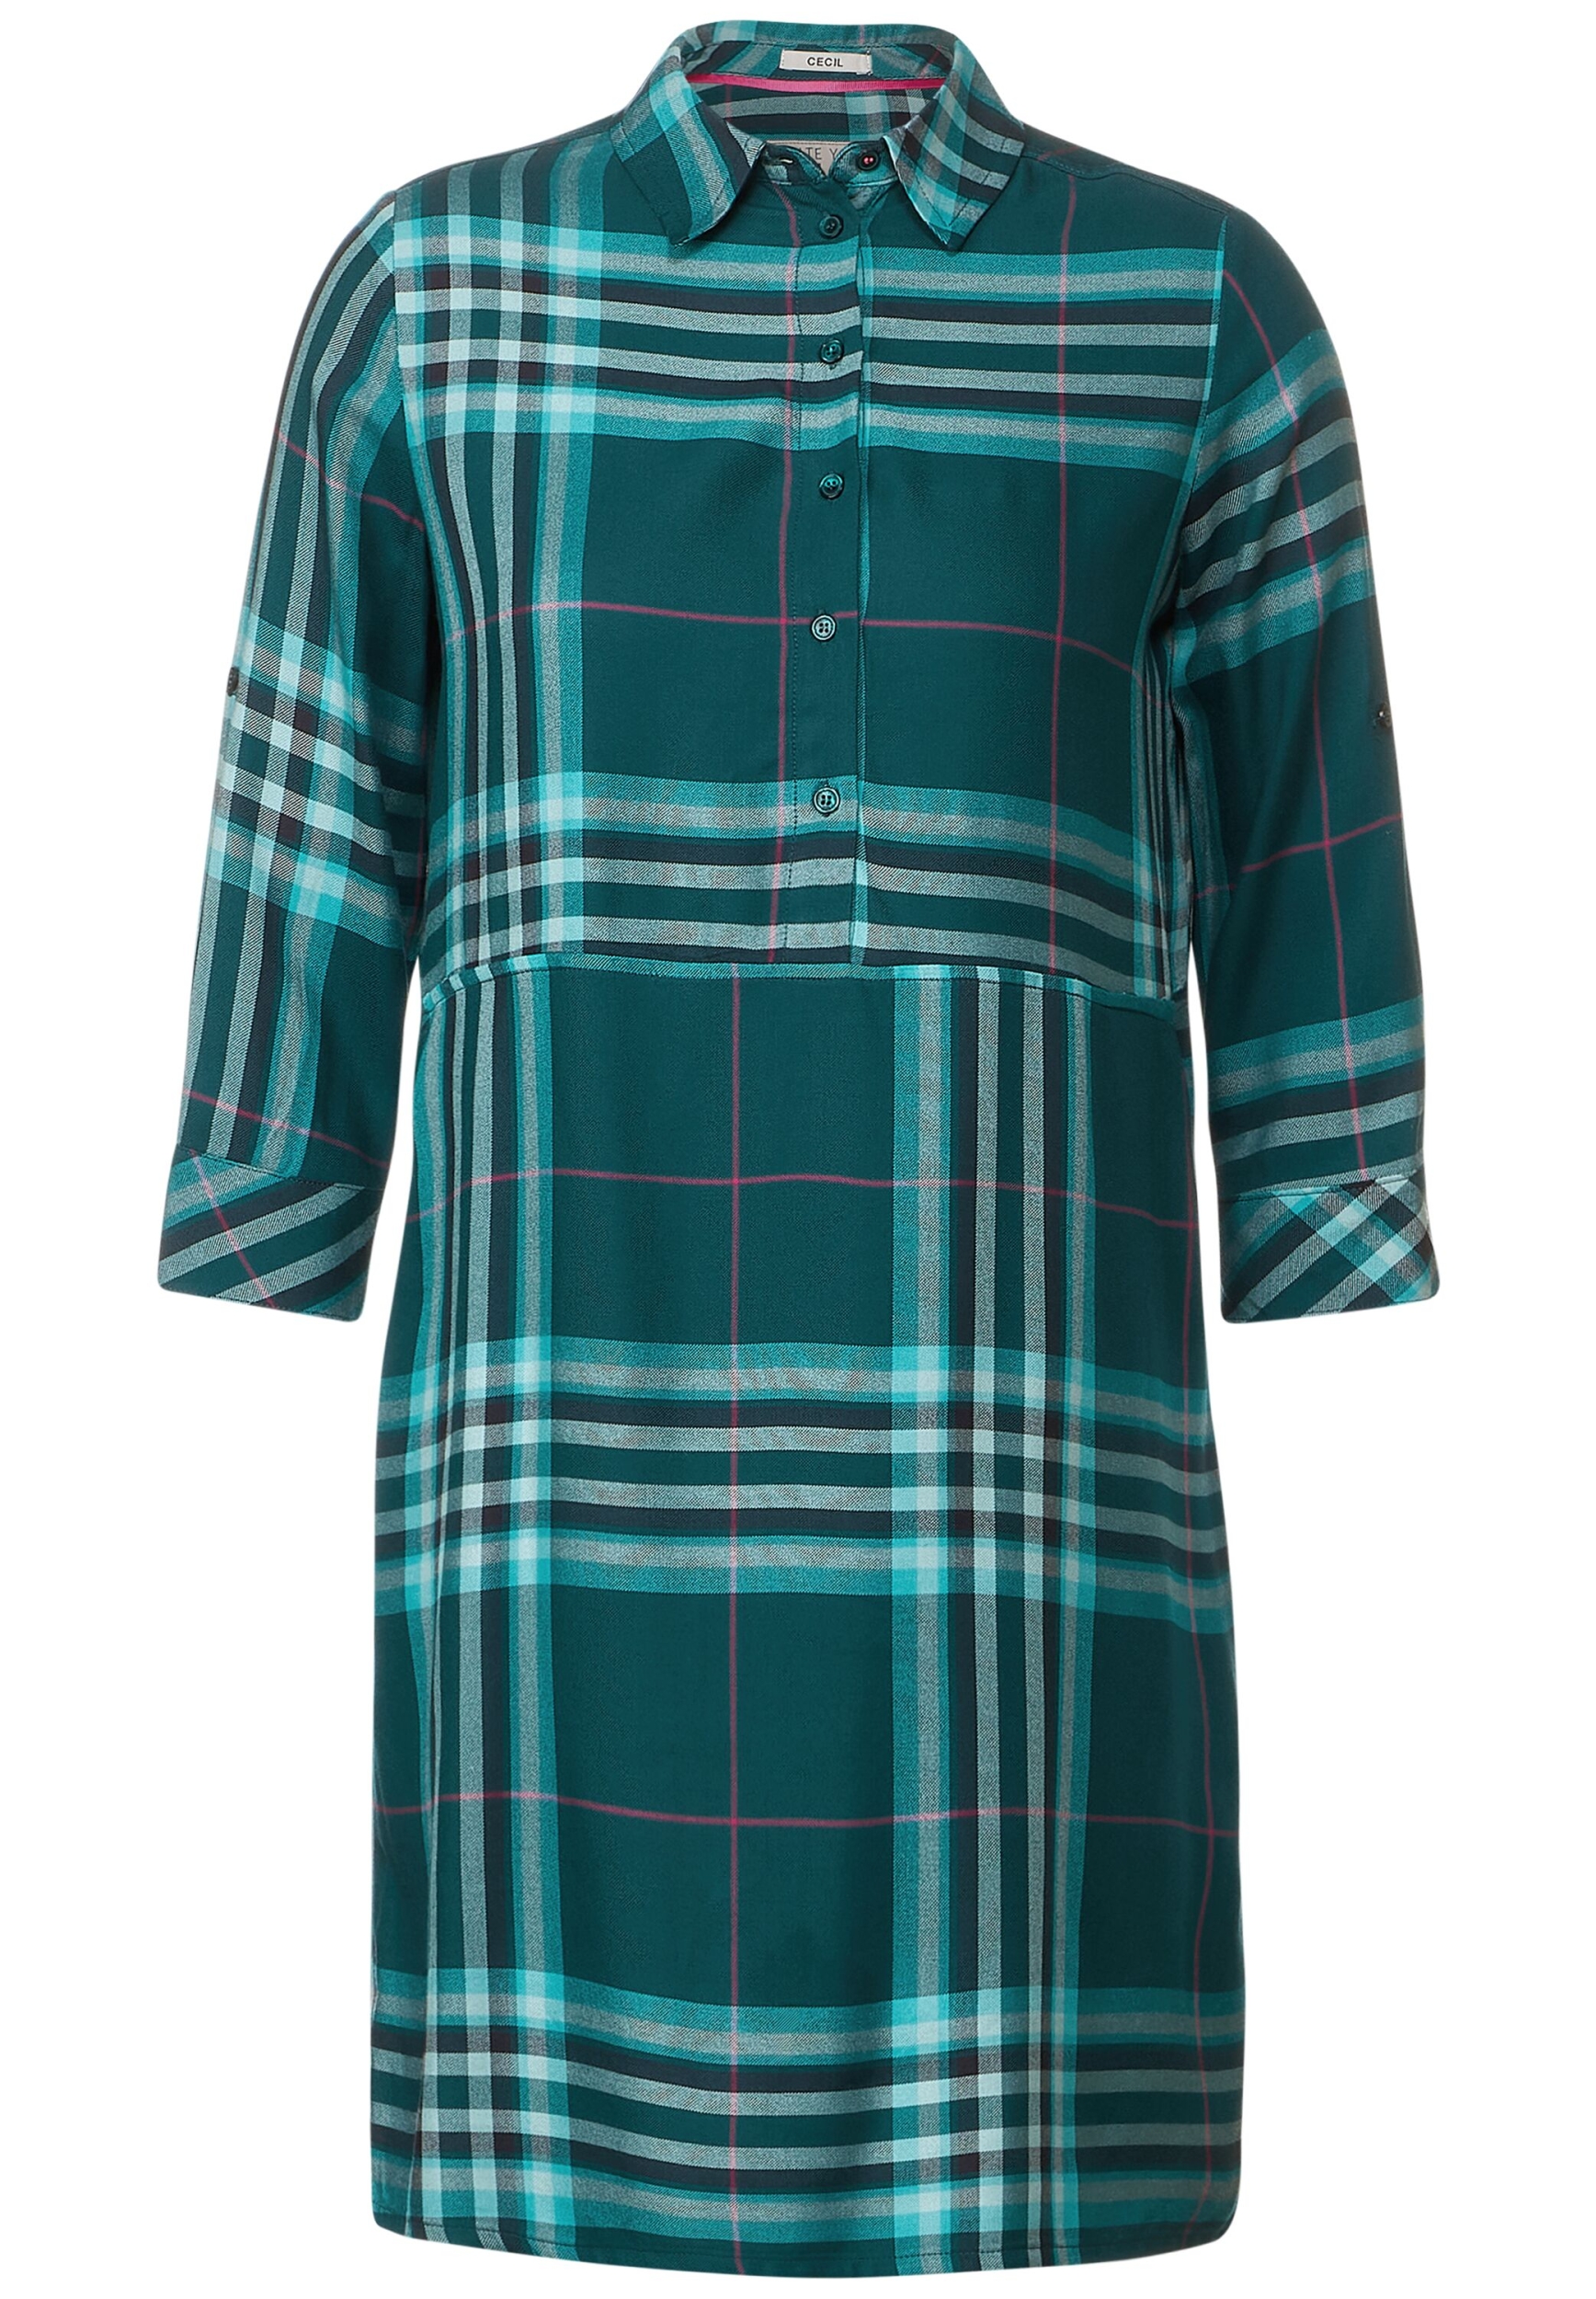 Super beliebt und 100 % Qualität garantiert! Blusenkleid Check Dress | B143700-34926-M | deep green lake | M